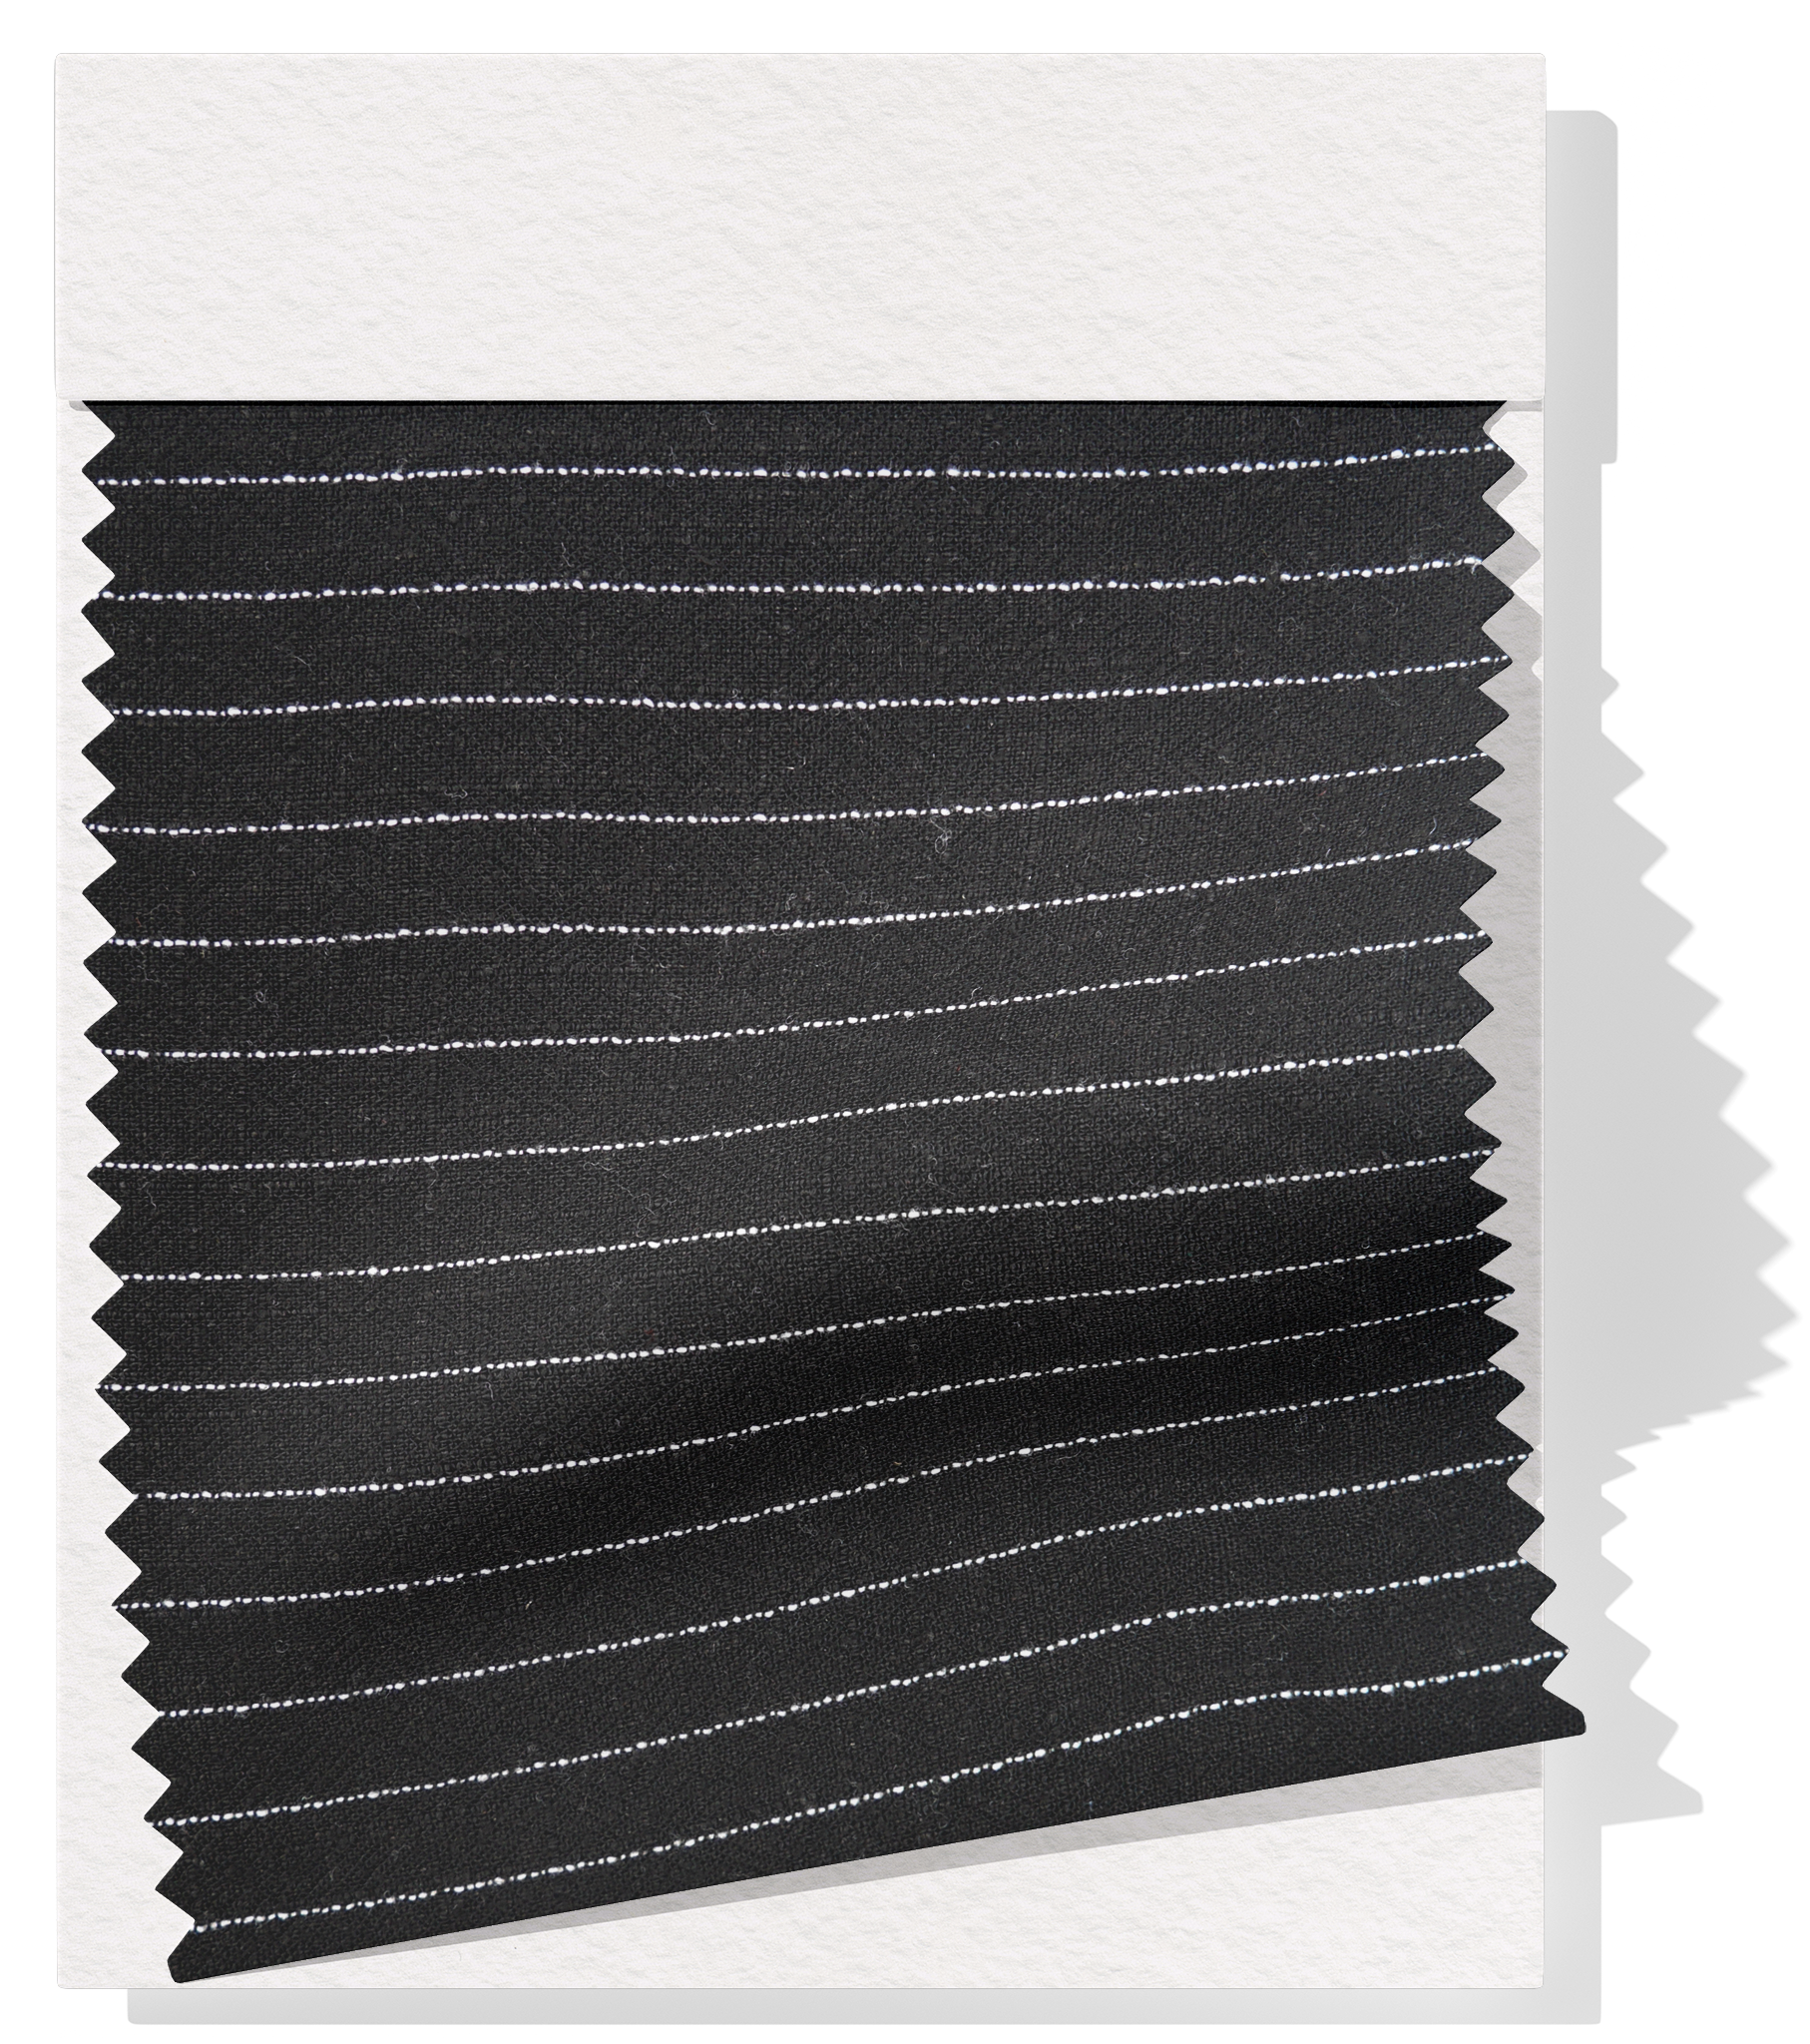 Striped Linen / Ramie $18.00p/m - Black with White Stripes